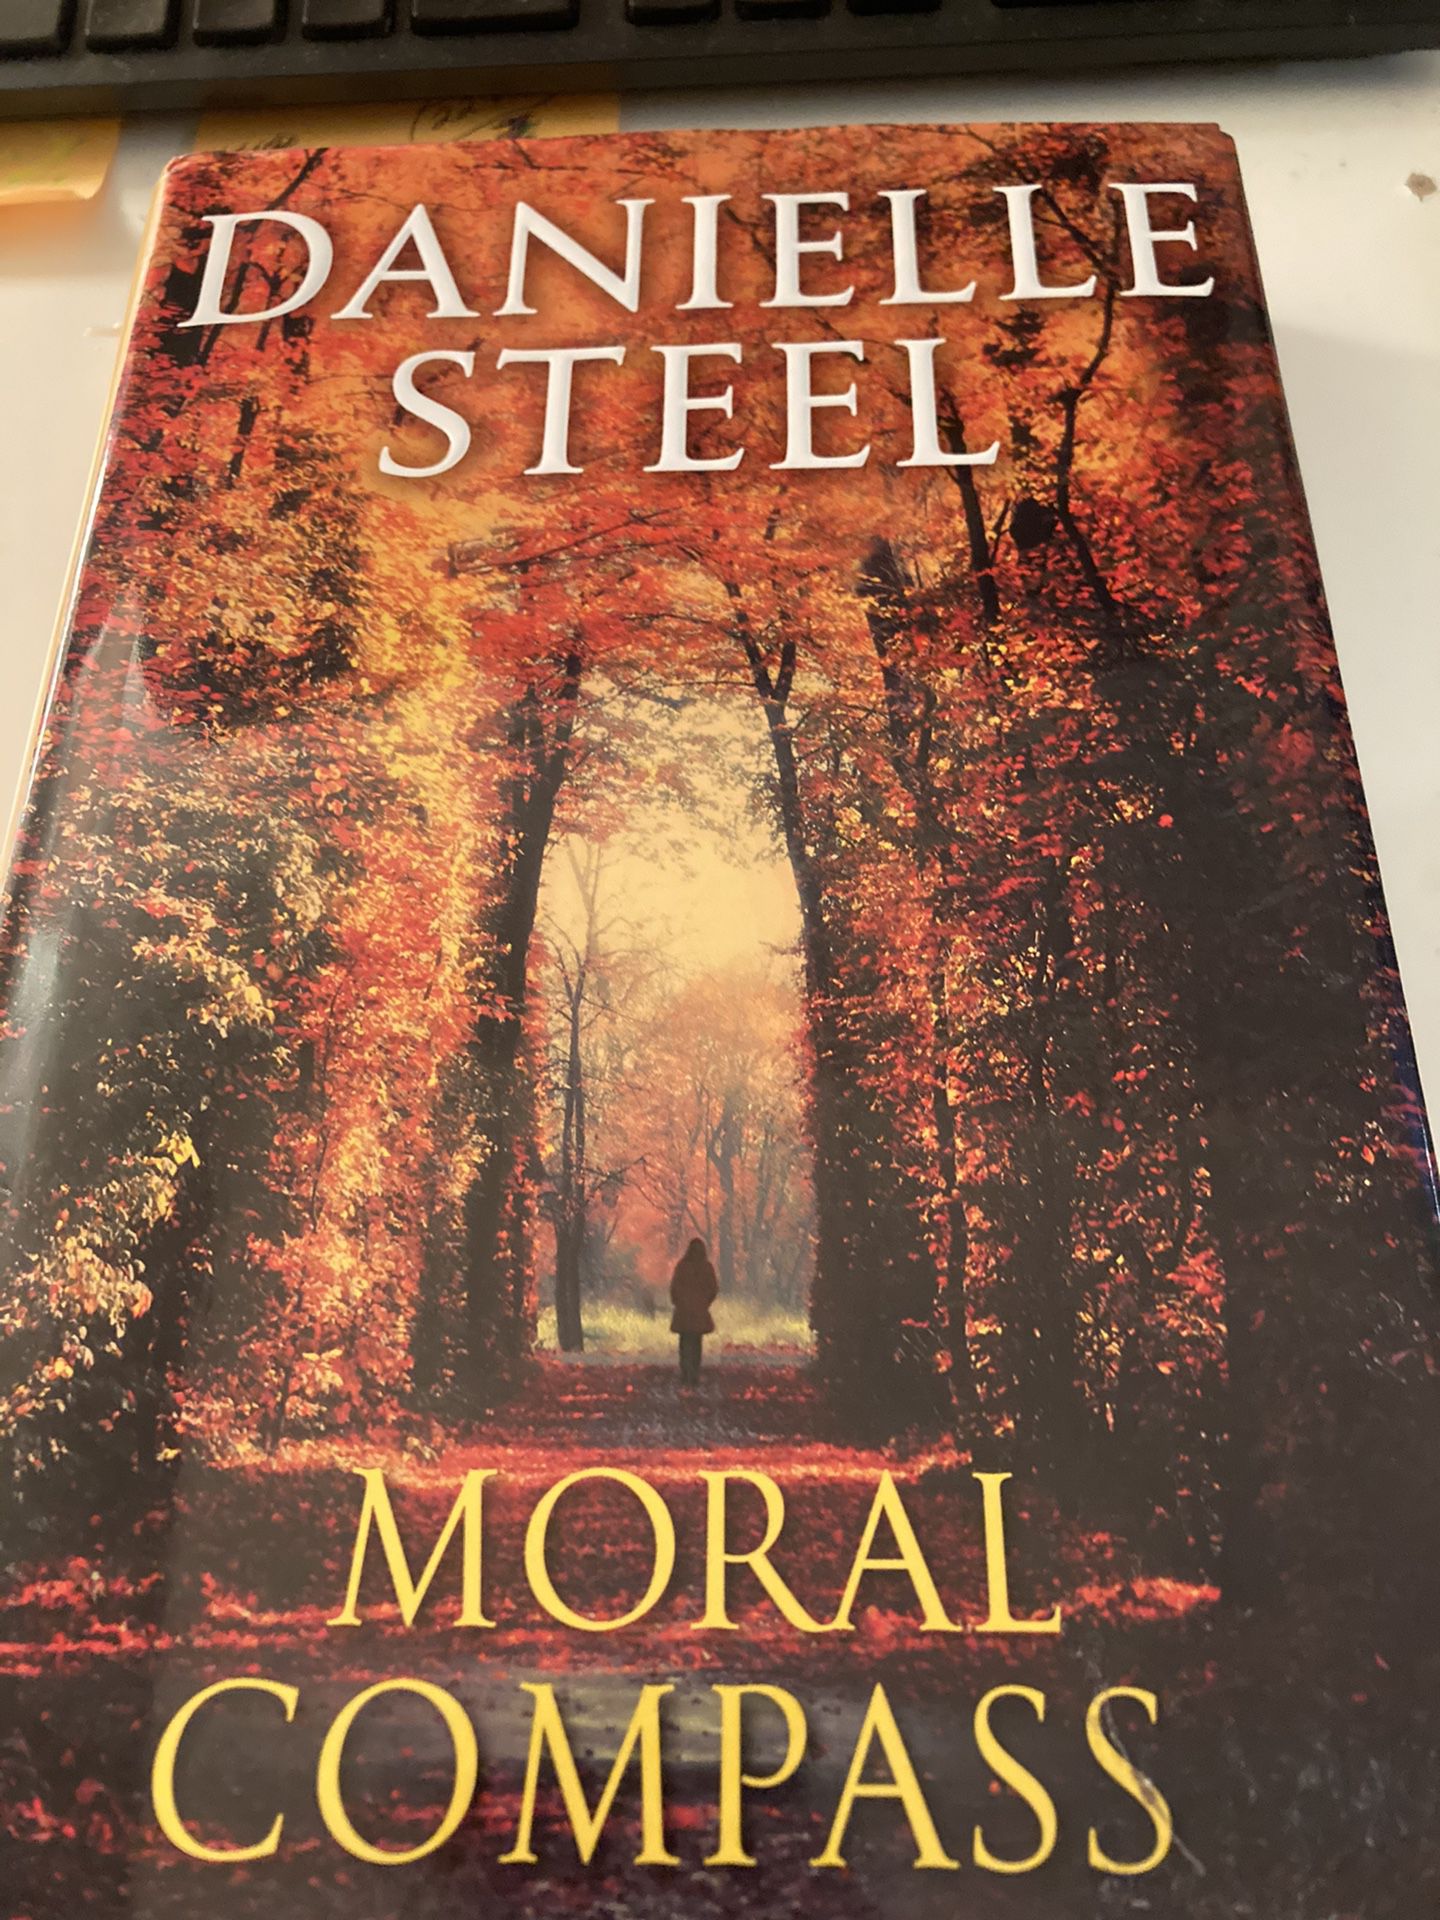 Danielle Steel Moral Compass